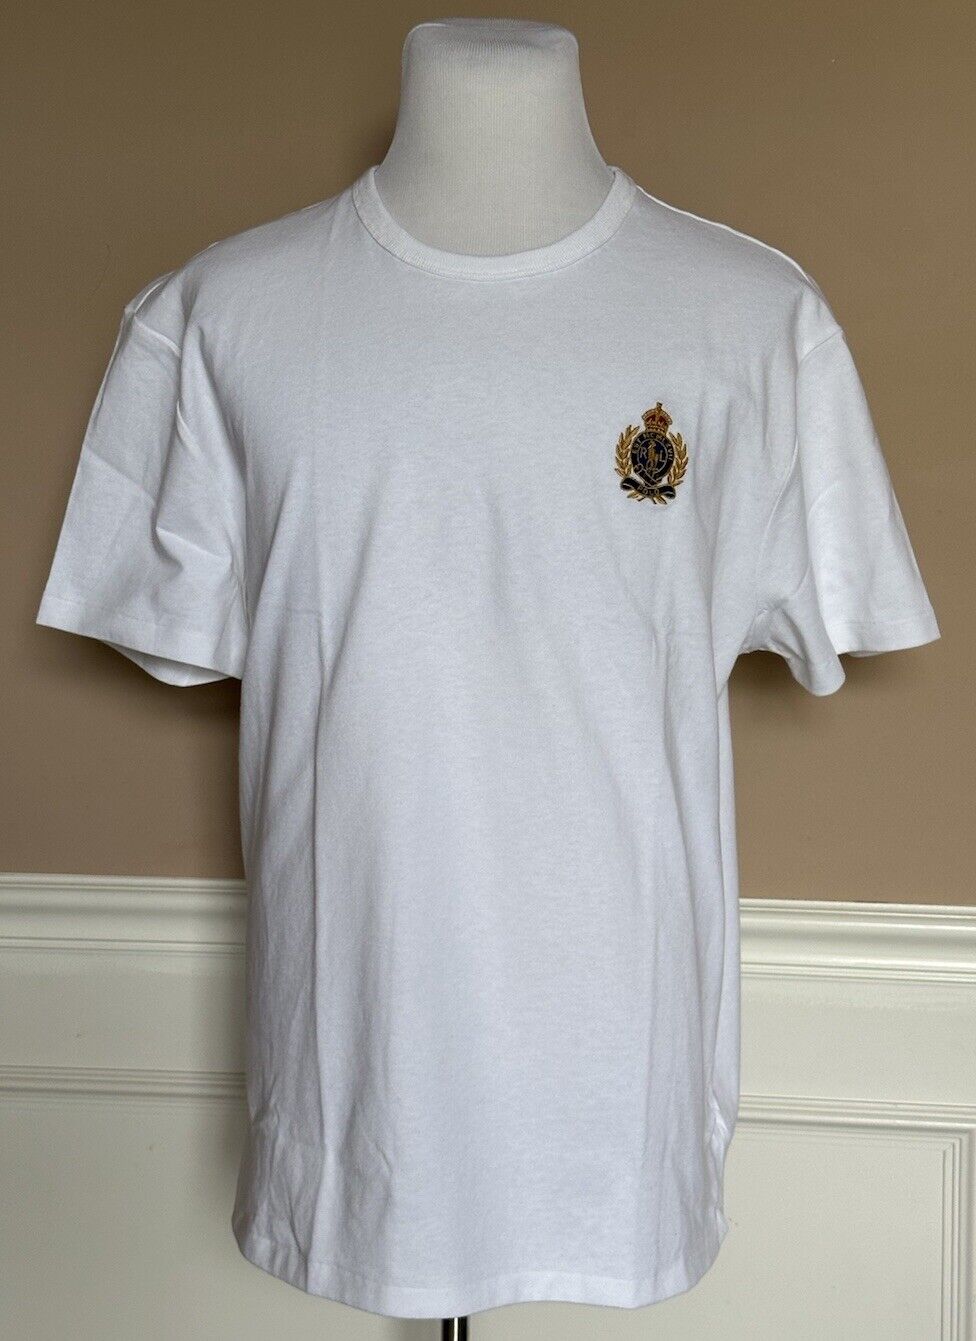 Polo Ralph Lauren Short Sleeve Classic Fit Logo T-shirt White XL/TG NWT $69.50